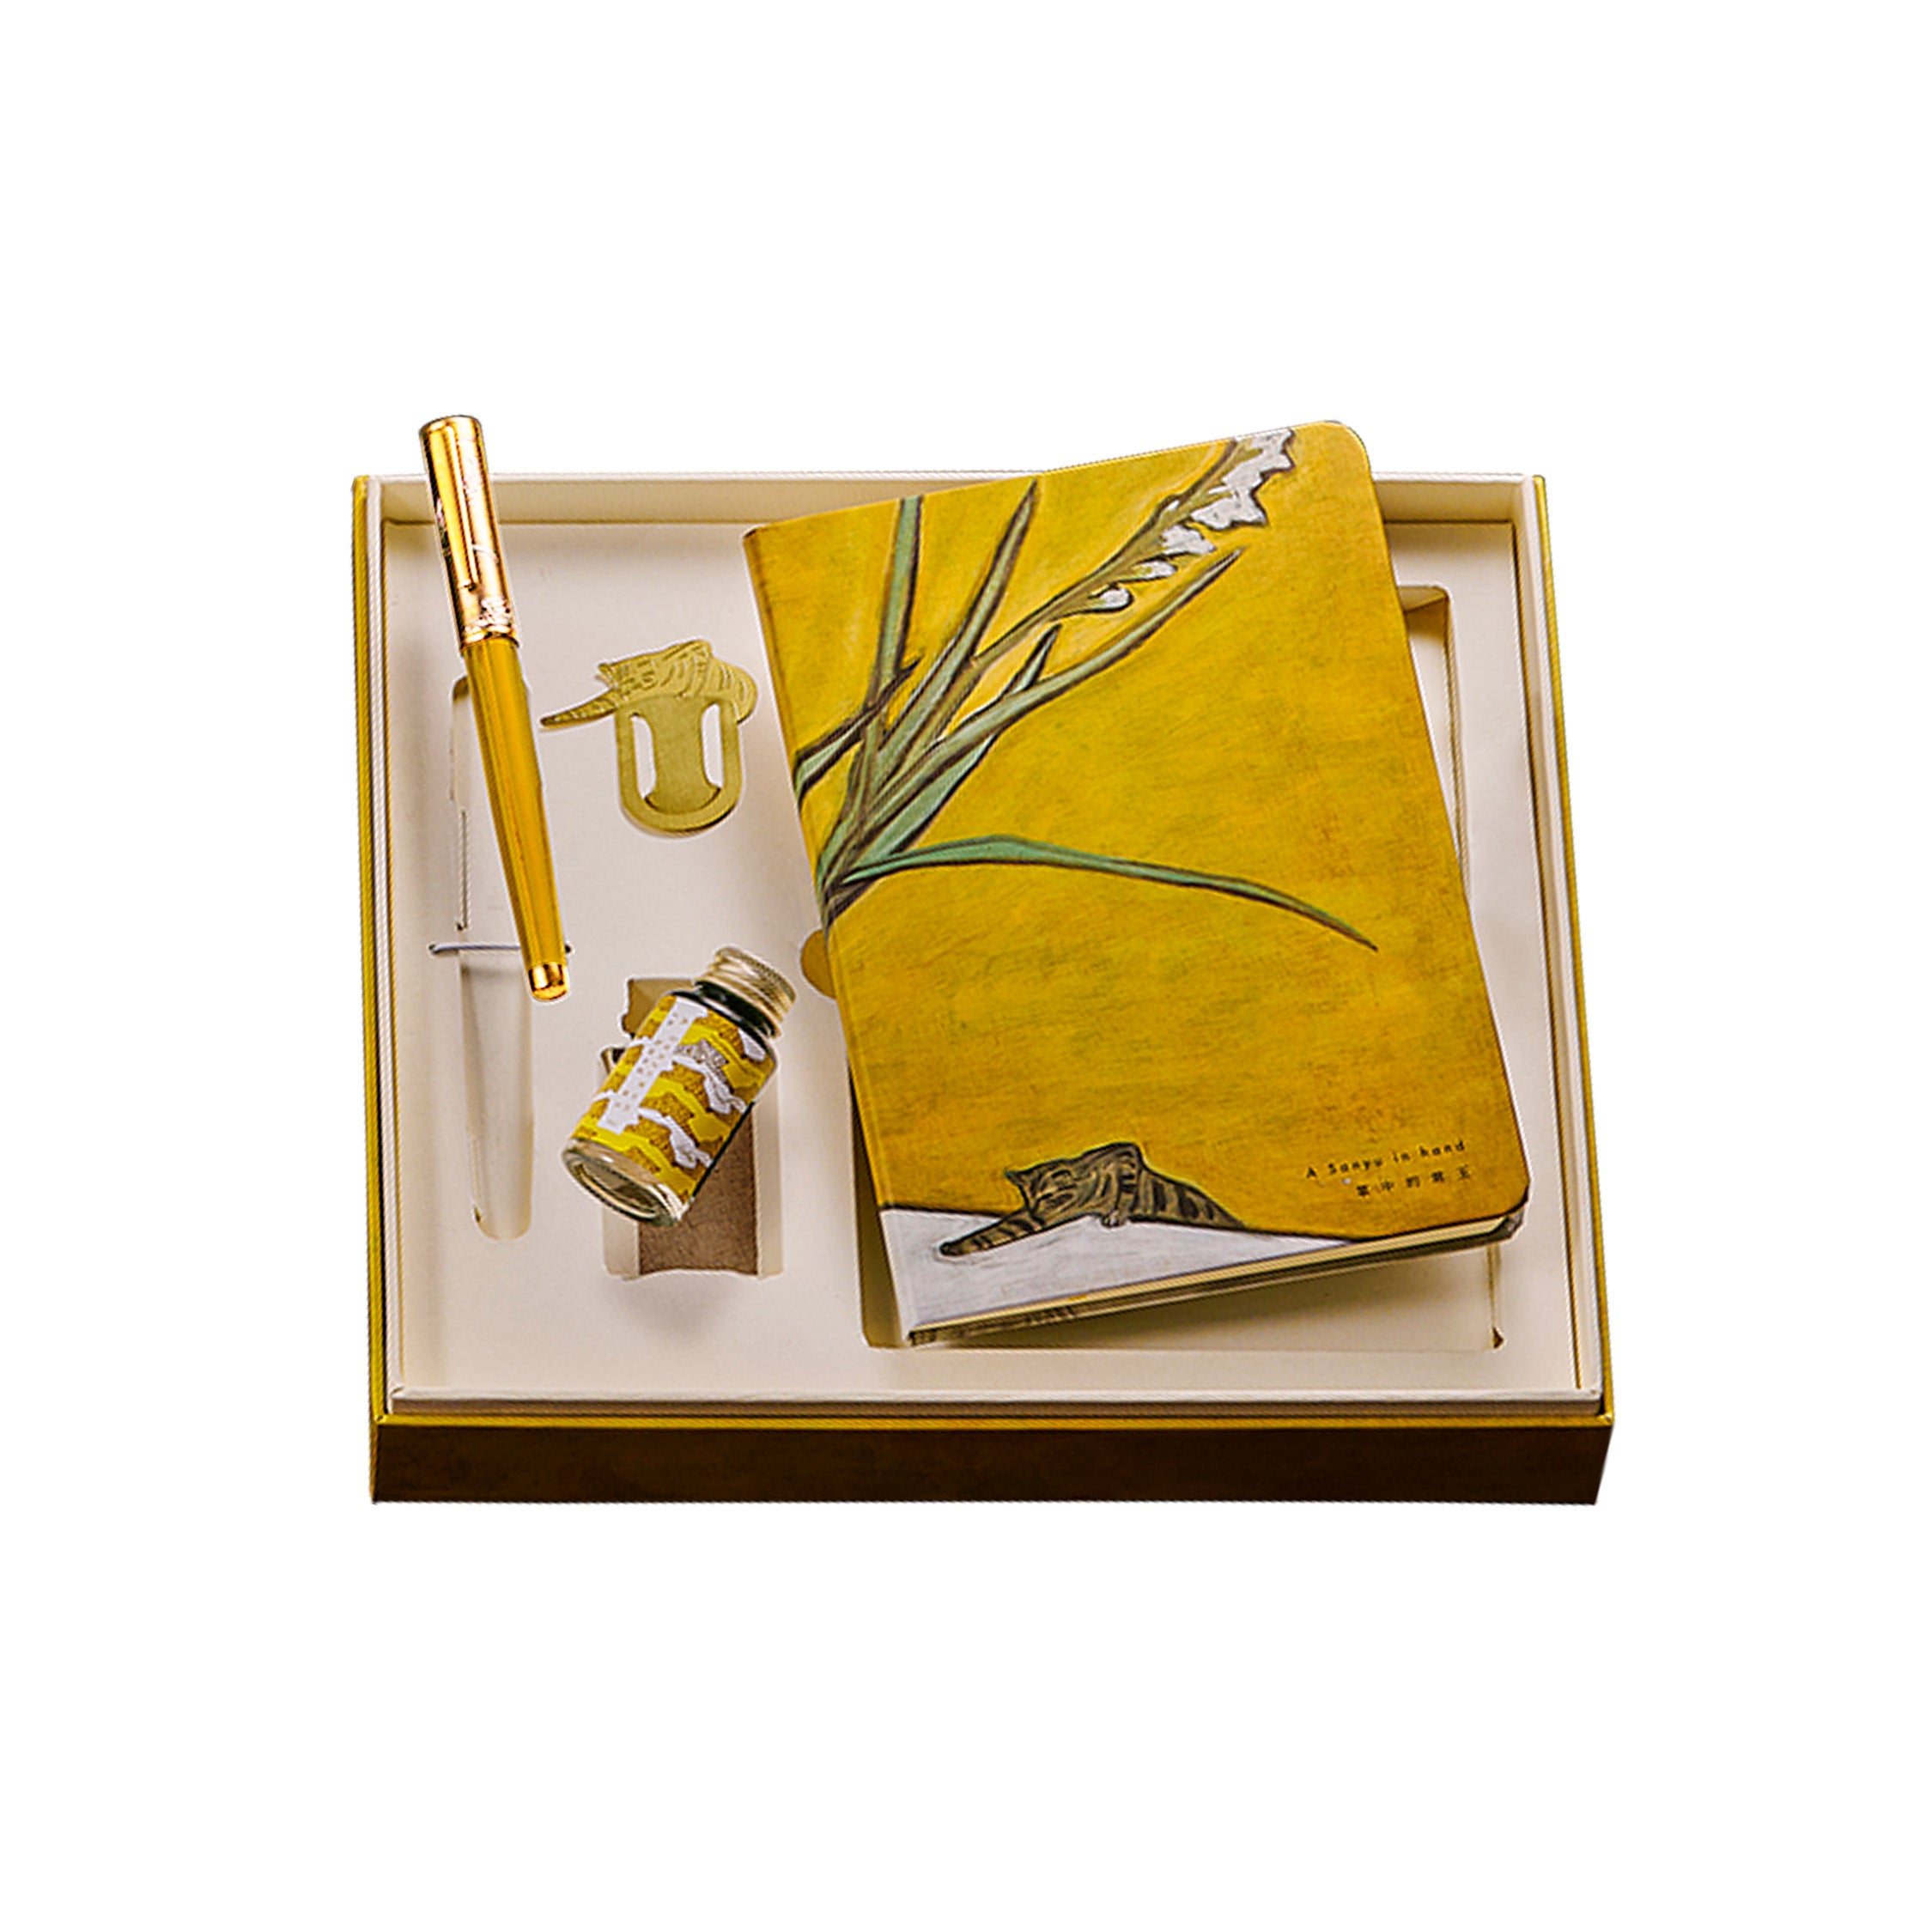 Tiankool Luxury Fountain Pen,Fine Nib, Exquisite Pen Gift Set for